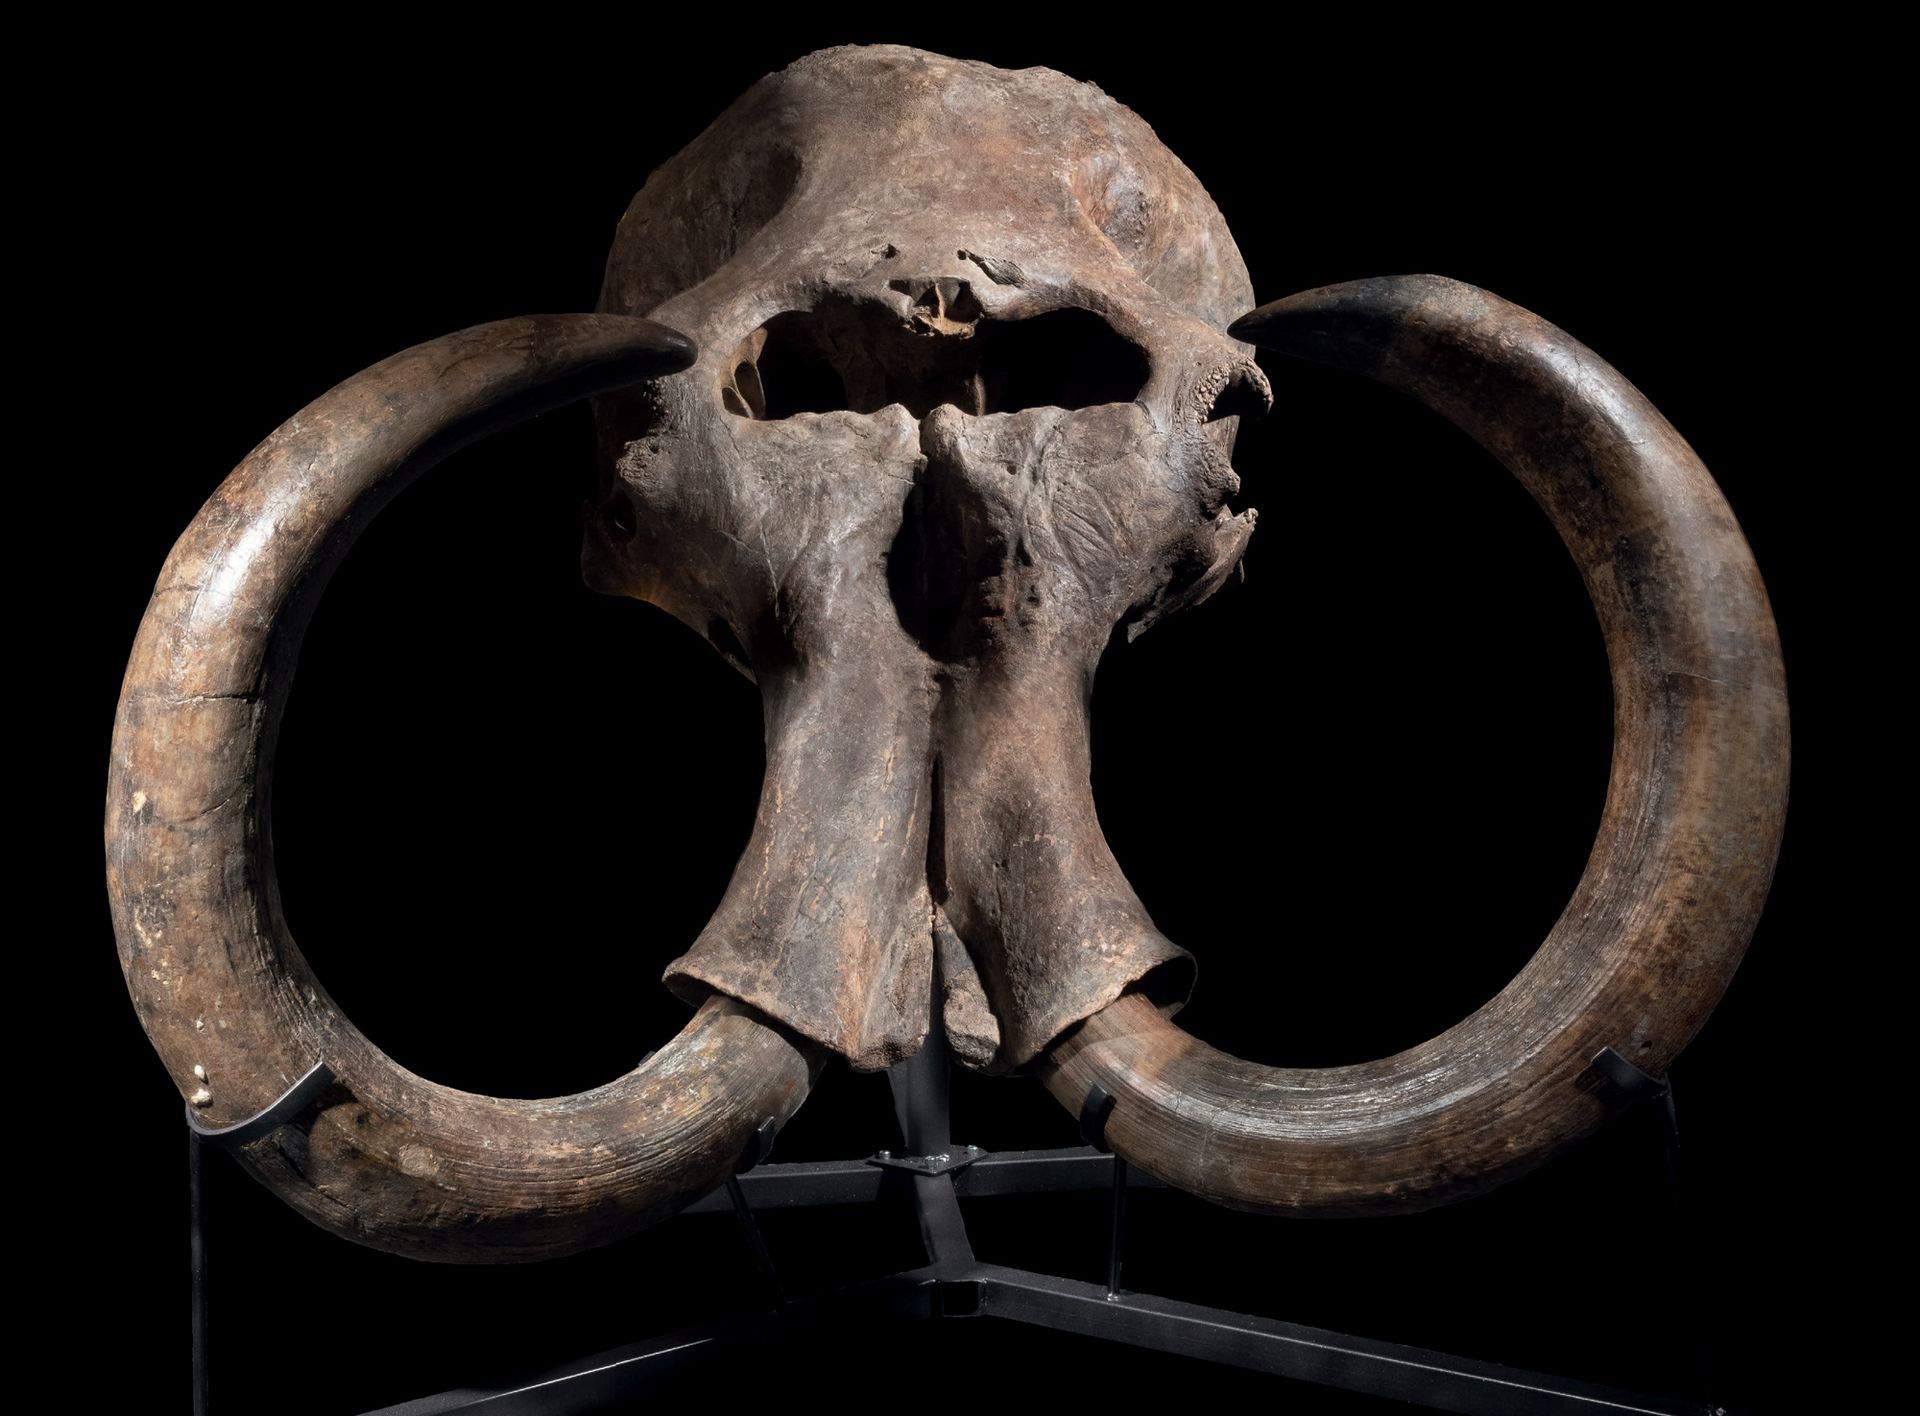 Null 罕见的阶梯式哺乳动物头骨
Mammuthus trogontherii
中更新世（0.7 - 0.2 Ma）
乌克兰
高110厘米 - 宽120厘米 &hellip;